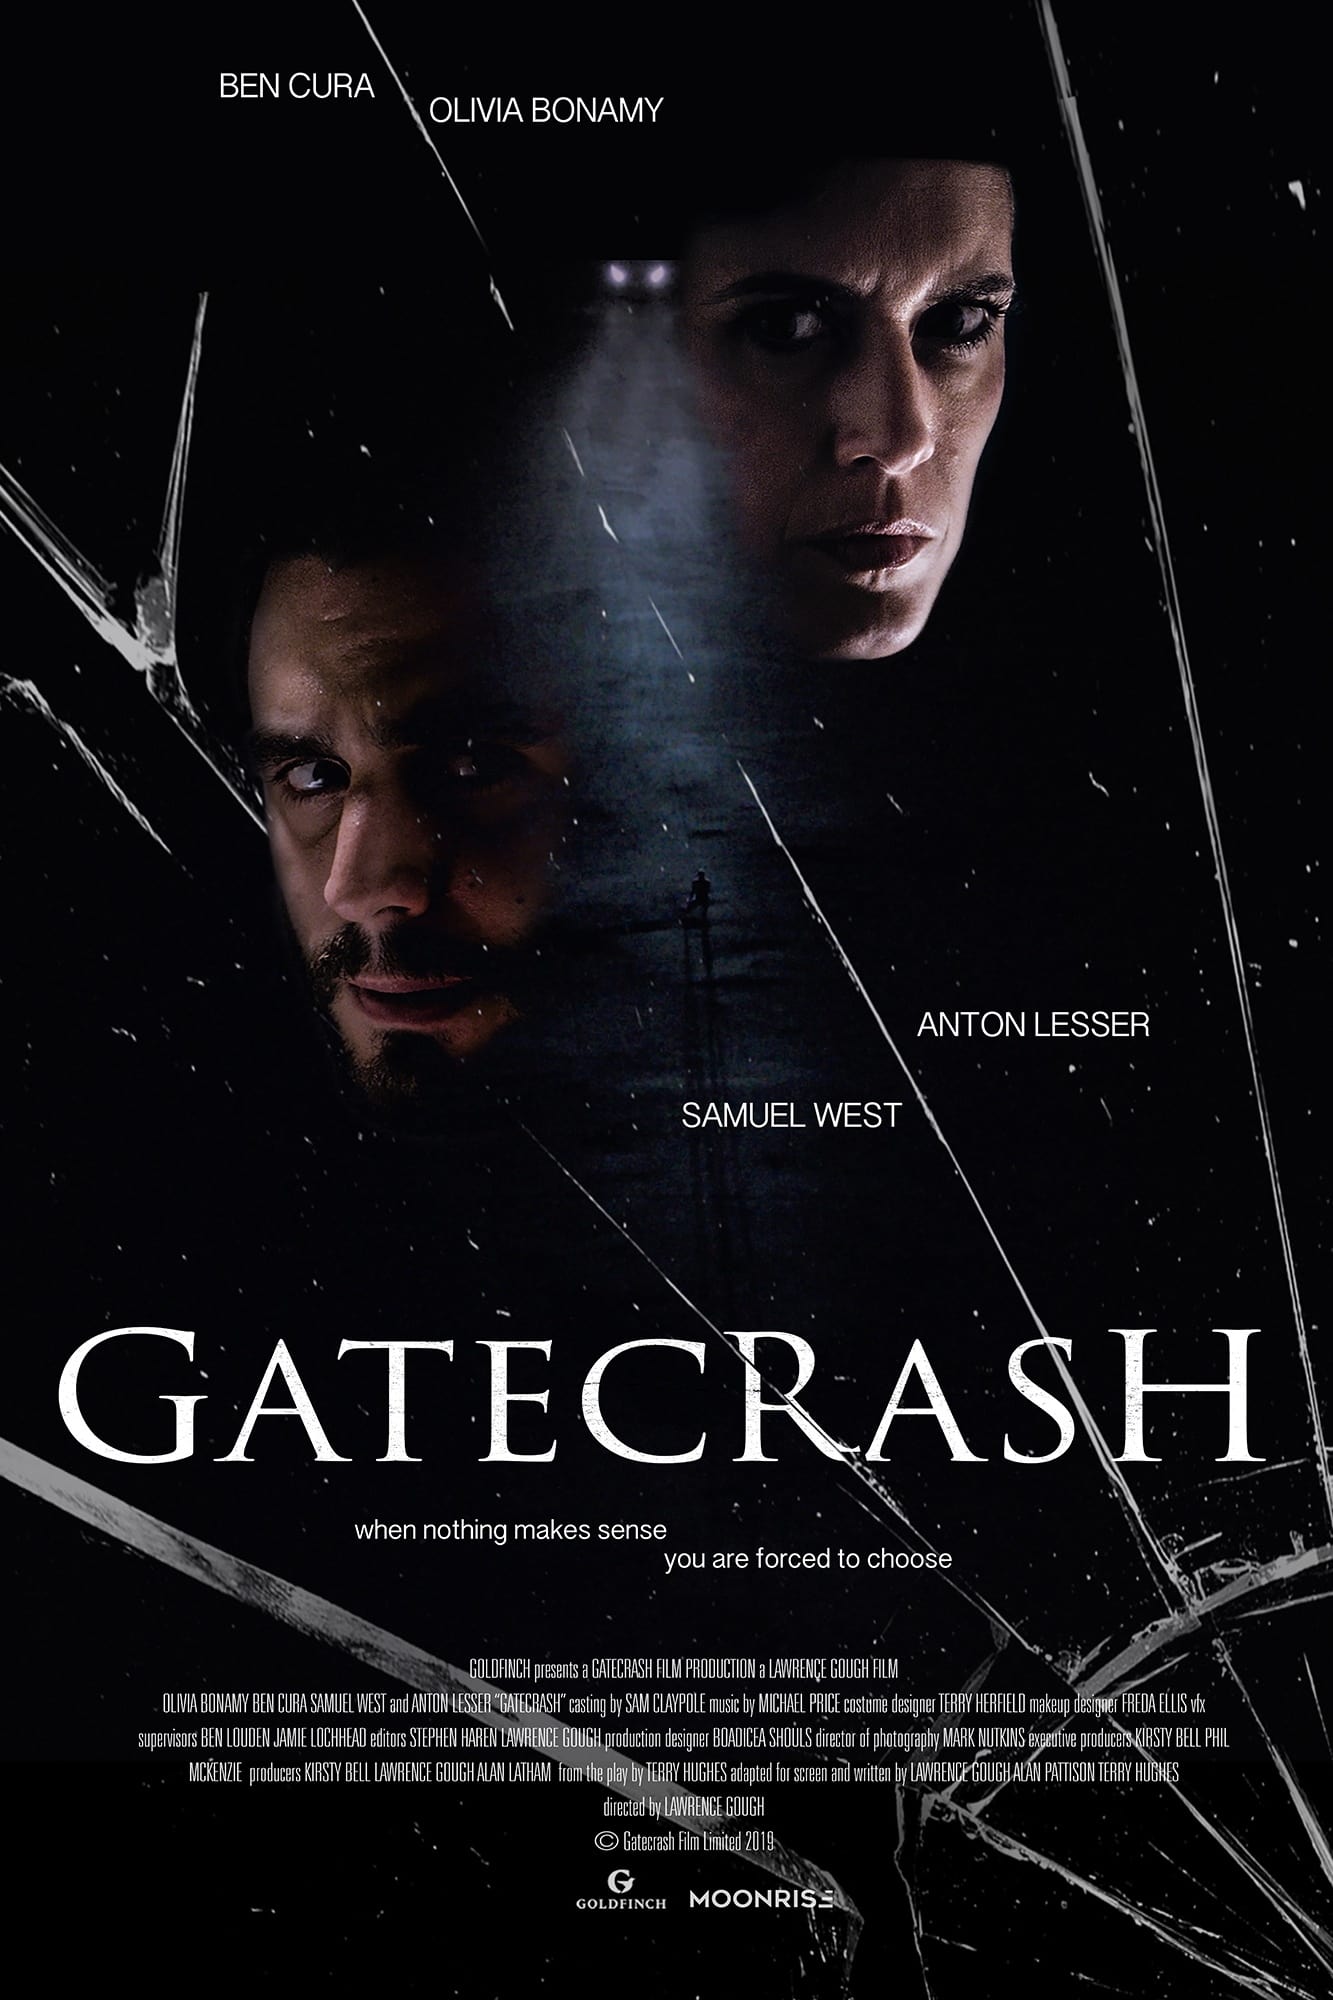 Gatecrash (2020)